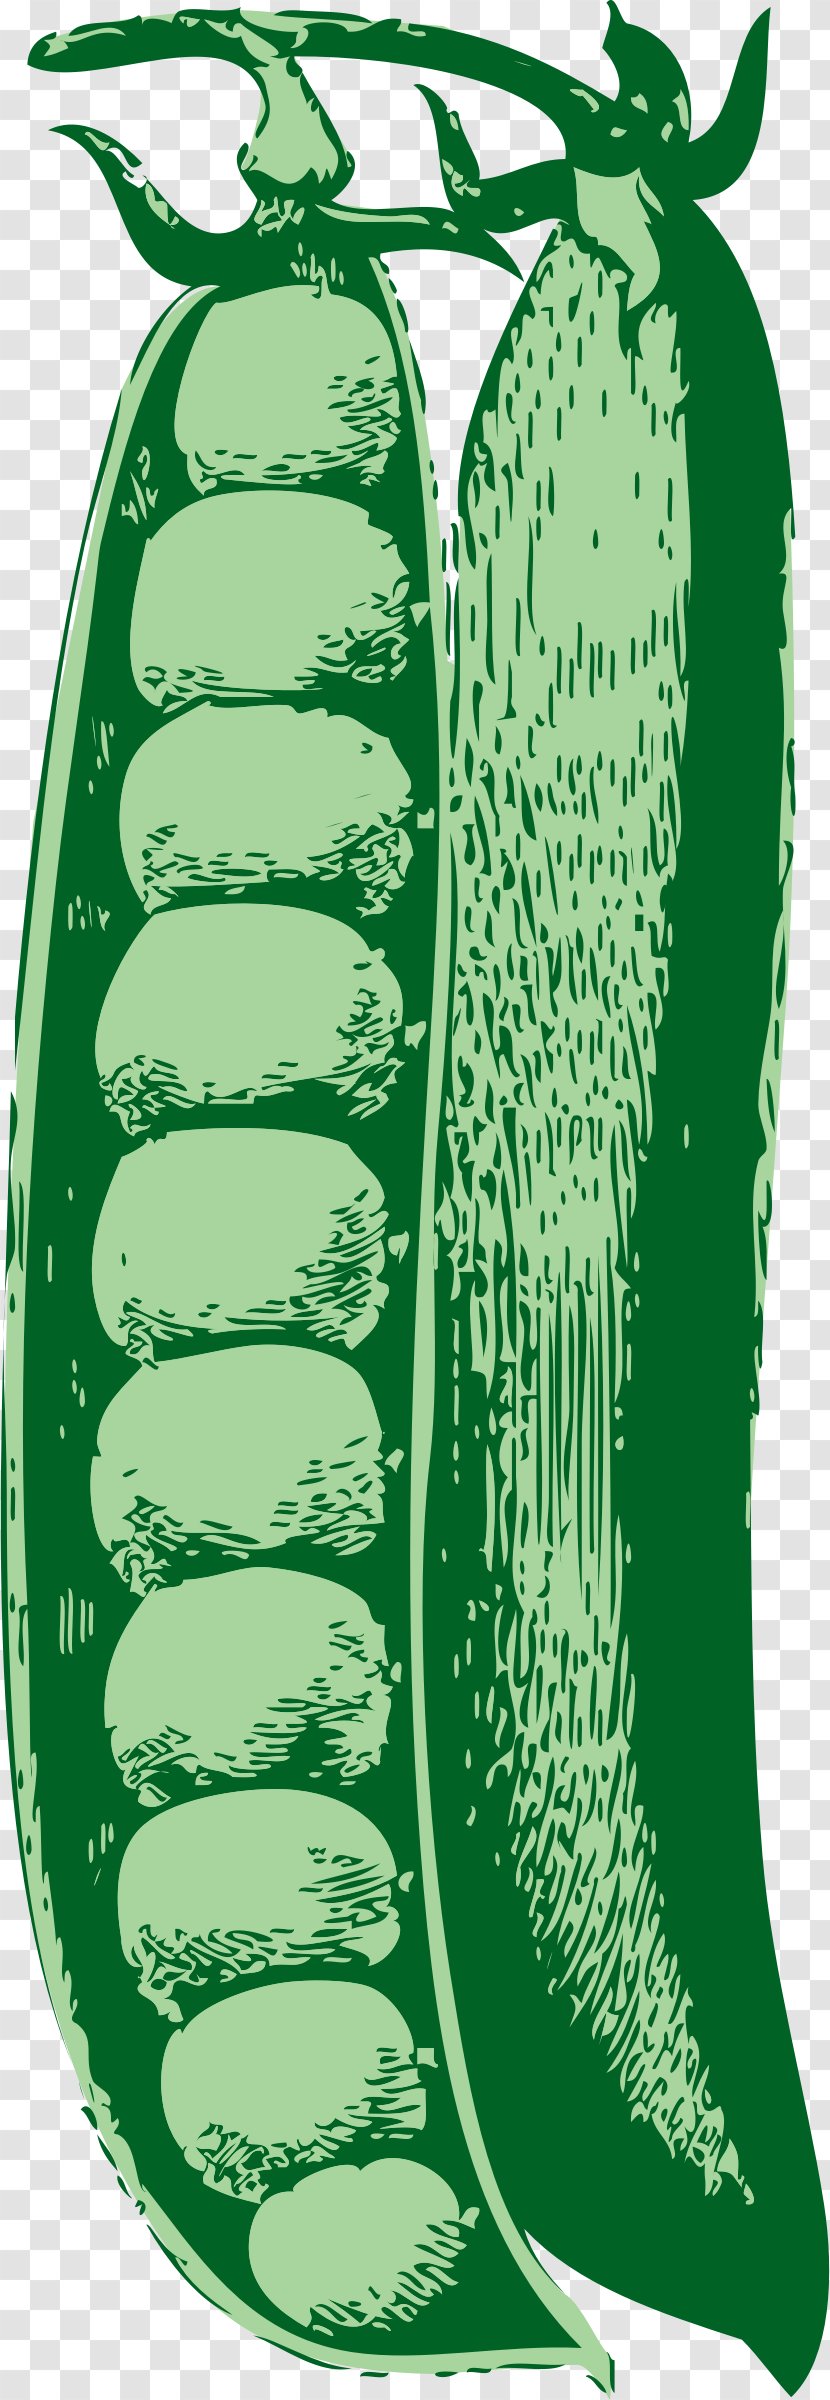 Pea Vegetable Legume Clip Art - Peas Transparent PNG